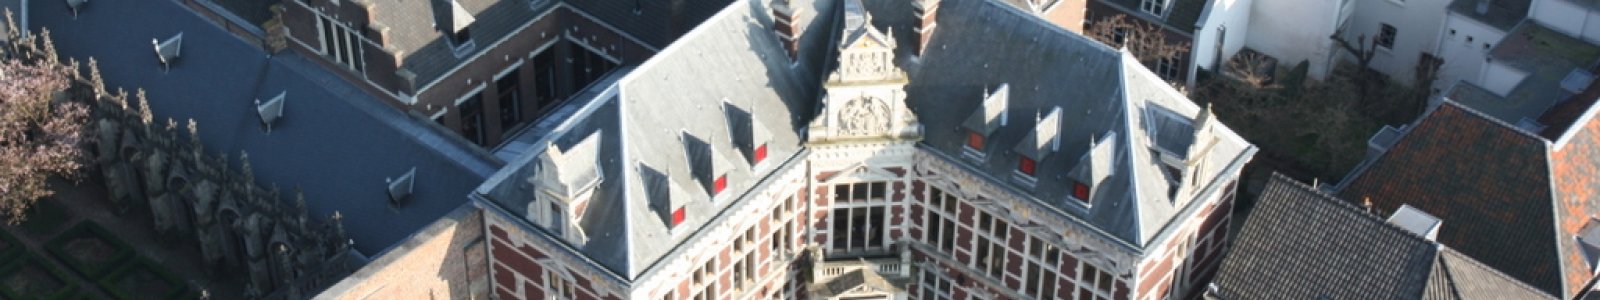 Academiegebouw Domplein Utrecht